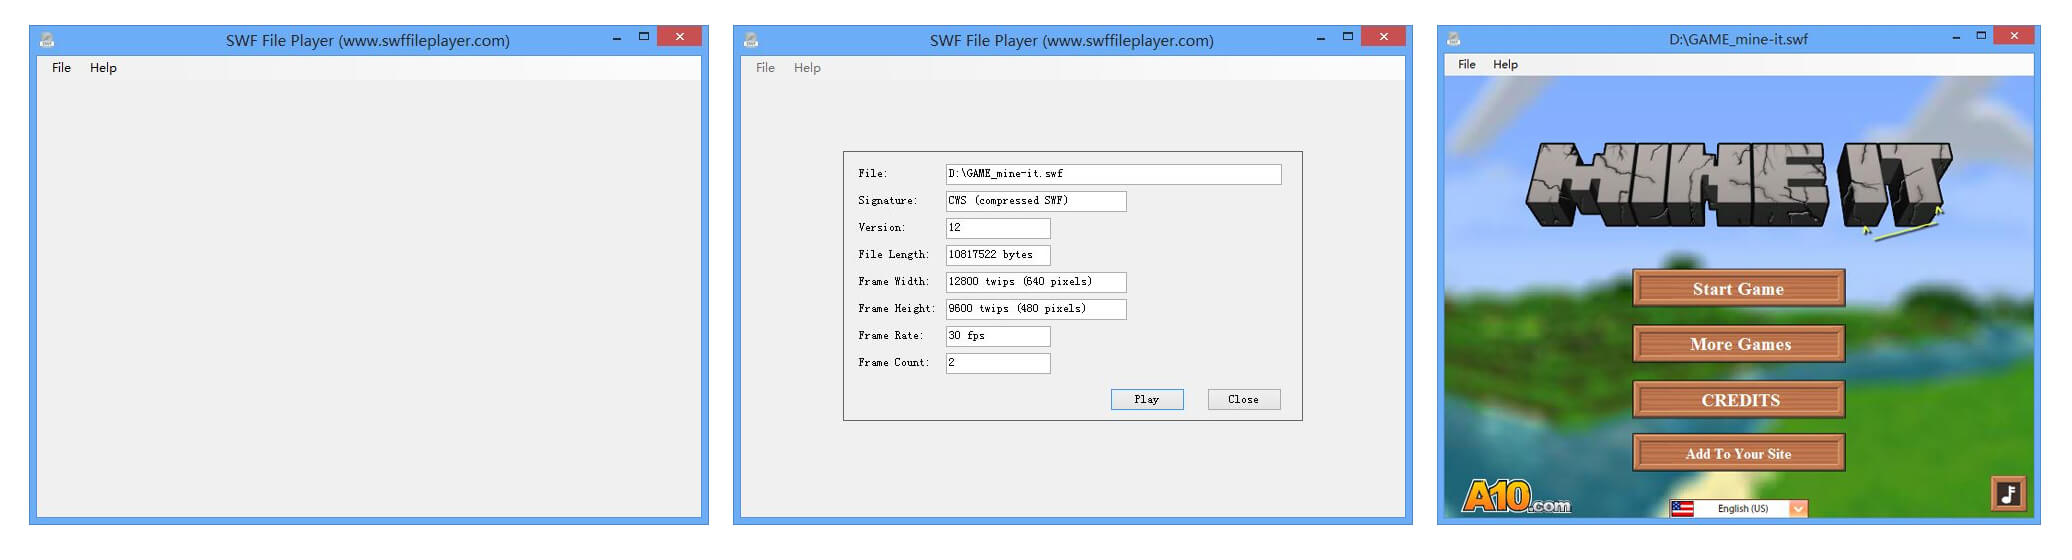 SWF-файл в SWF File Player